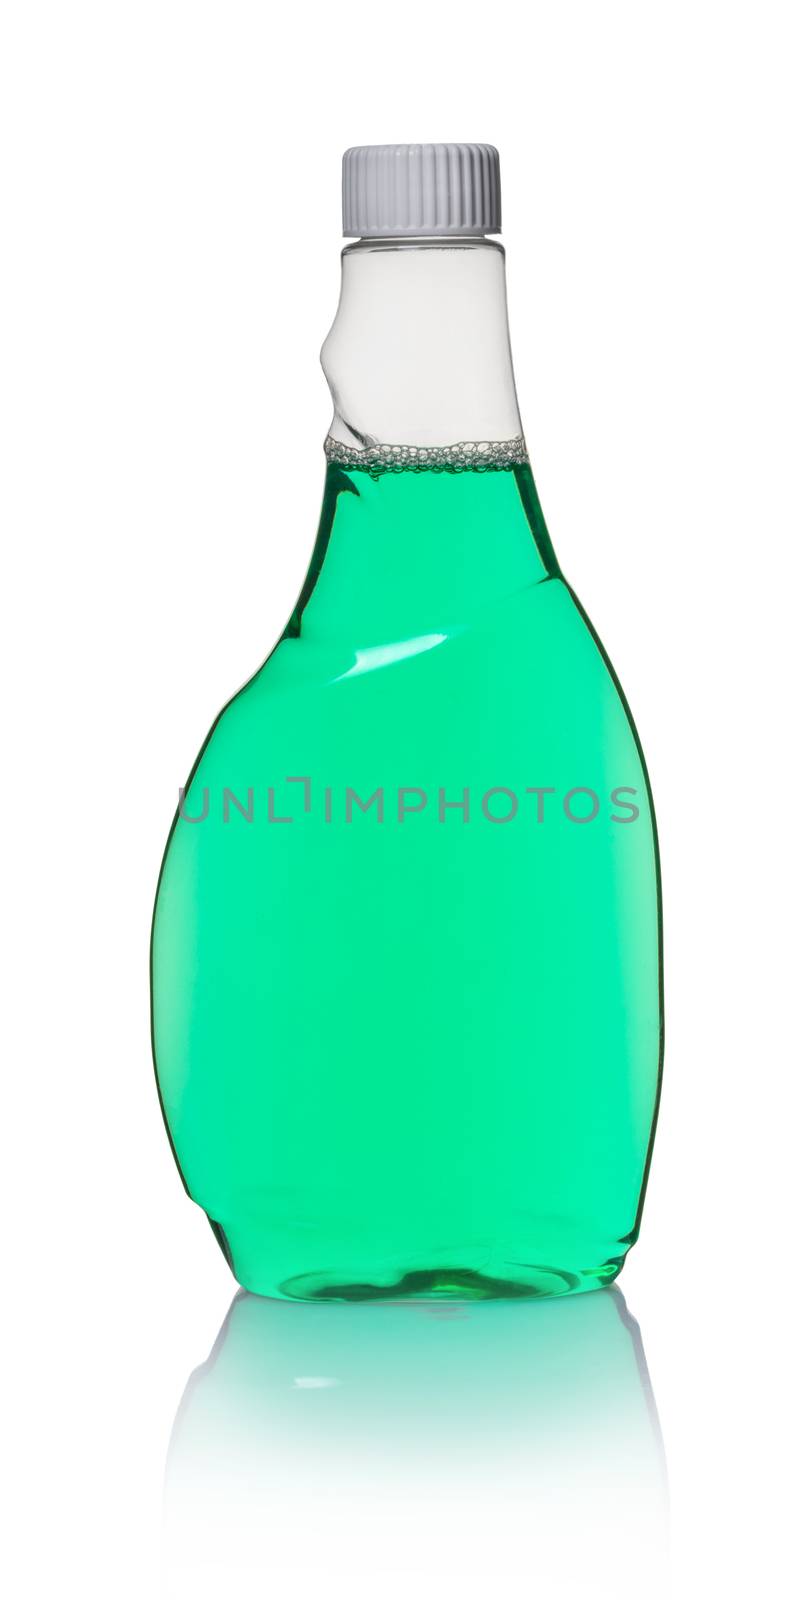 detergent in bottle by MegaArt